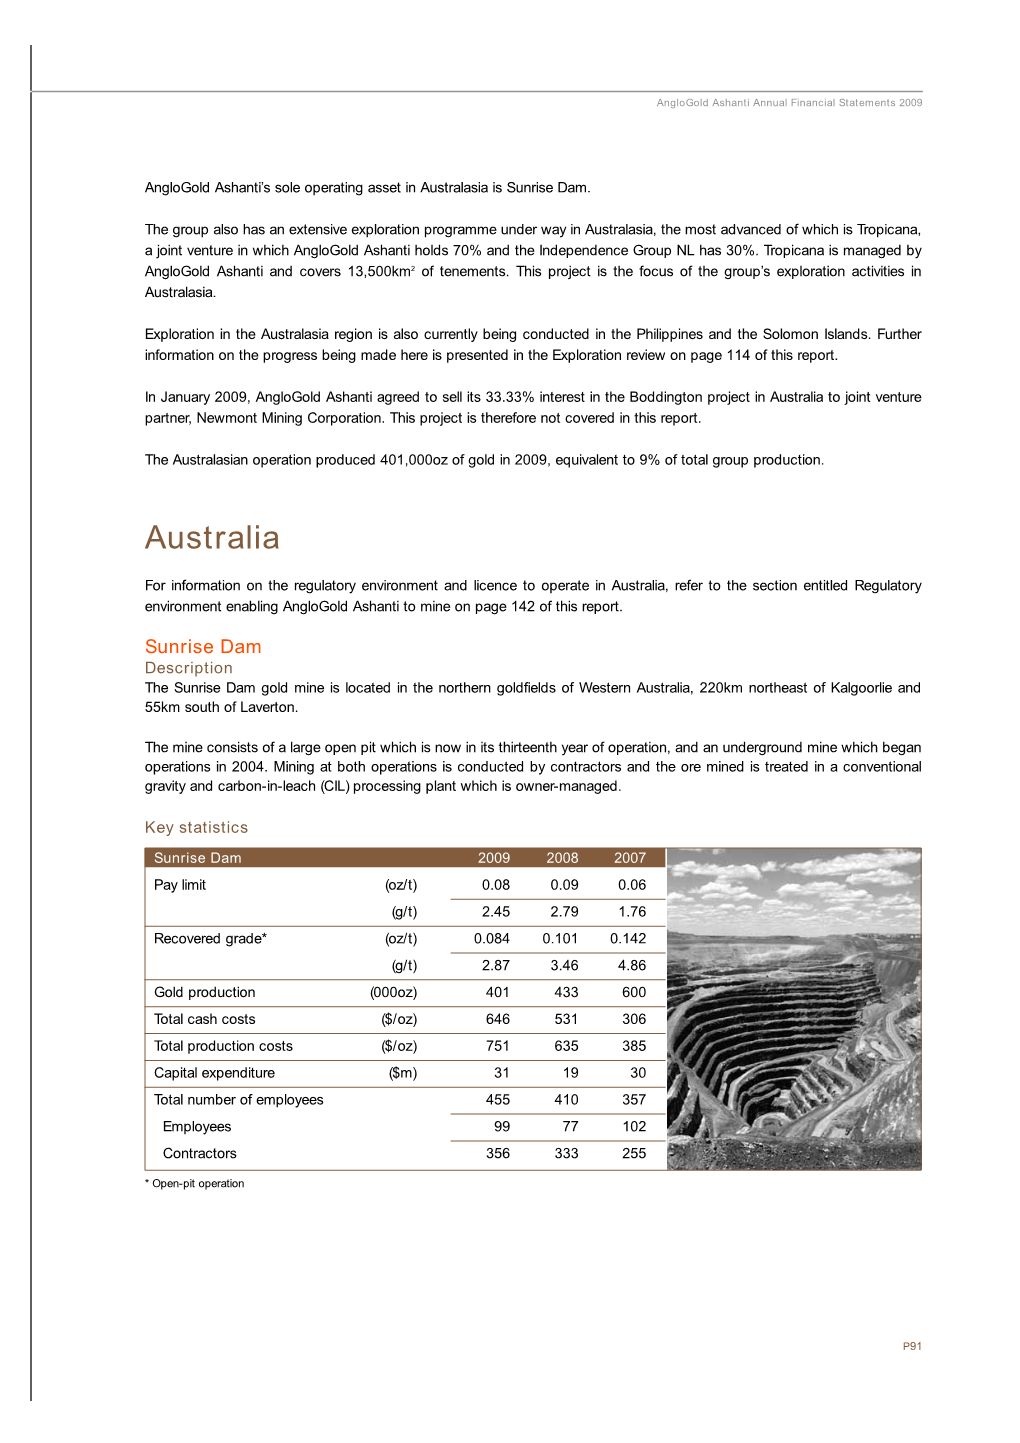 Australia to Joint Venture Partner, Newmont Mining Corporation